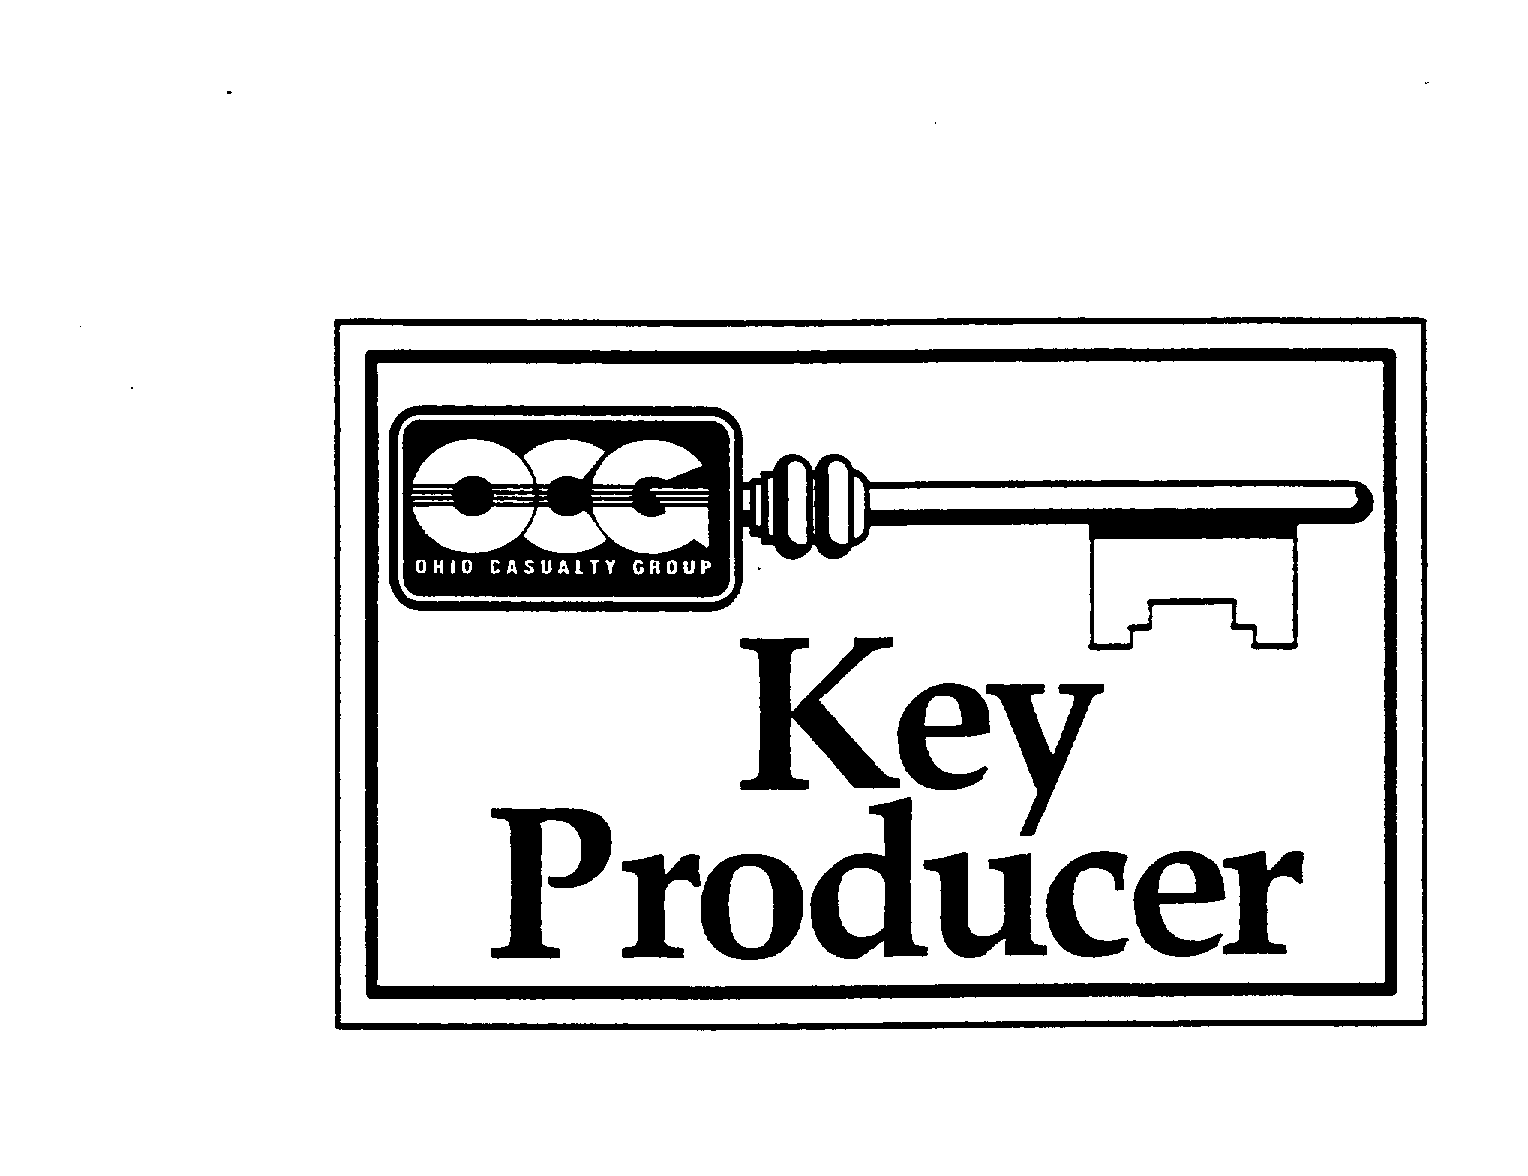  OCG OHIO CASUALTY GROUP KEY PRODUCER